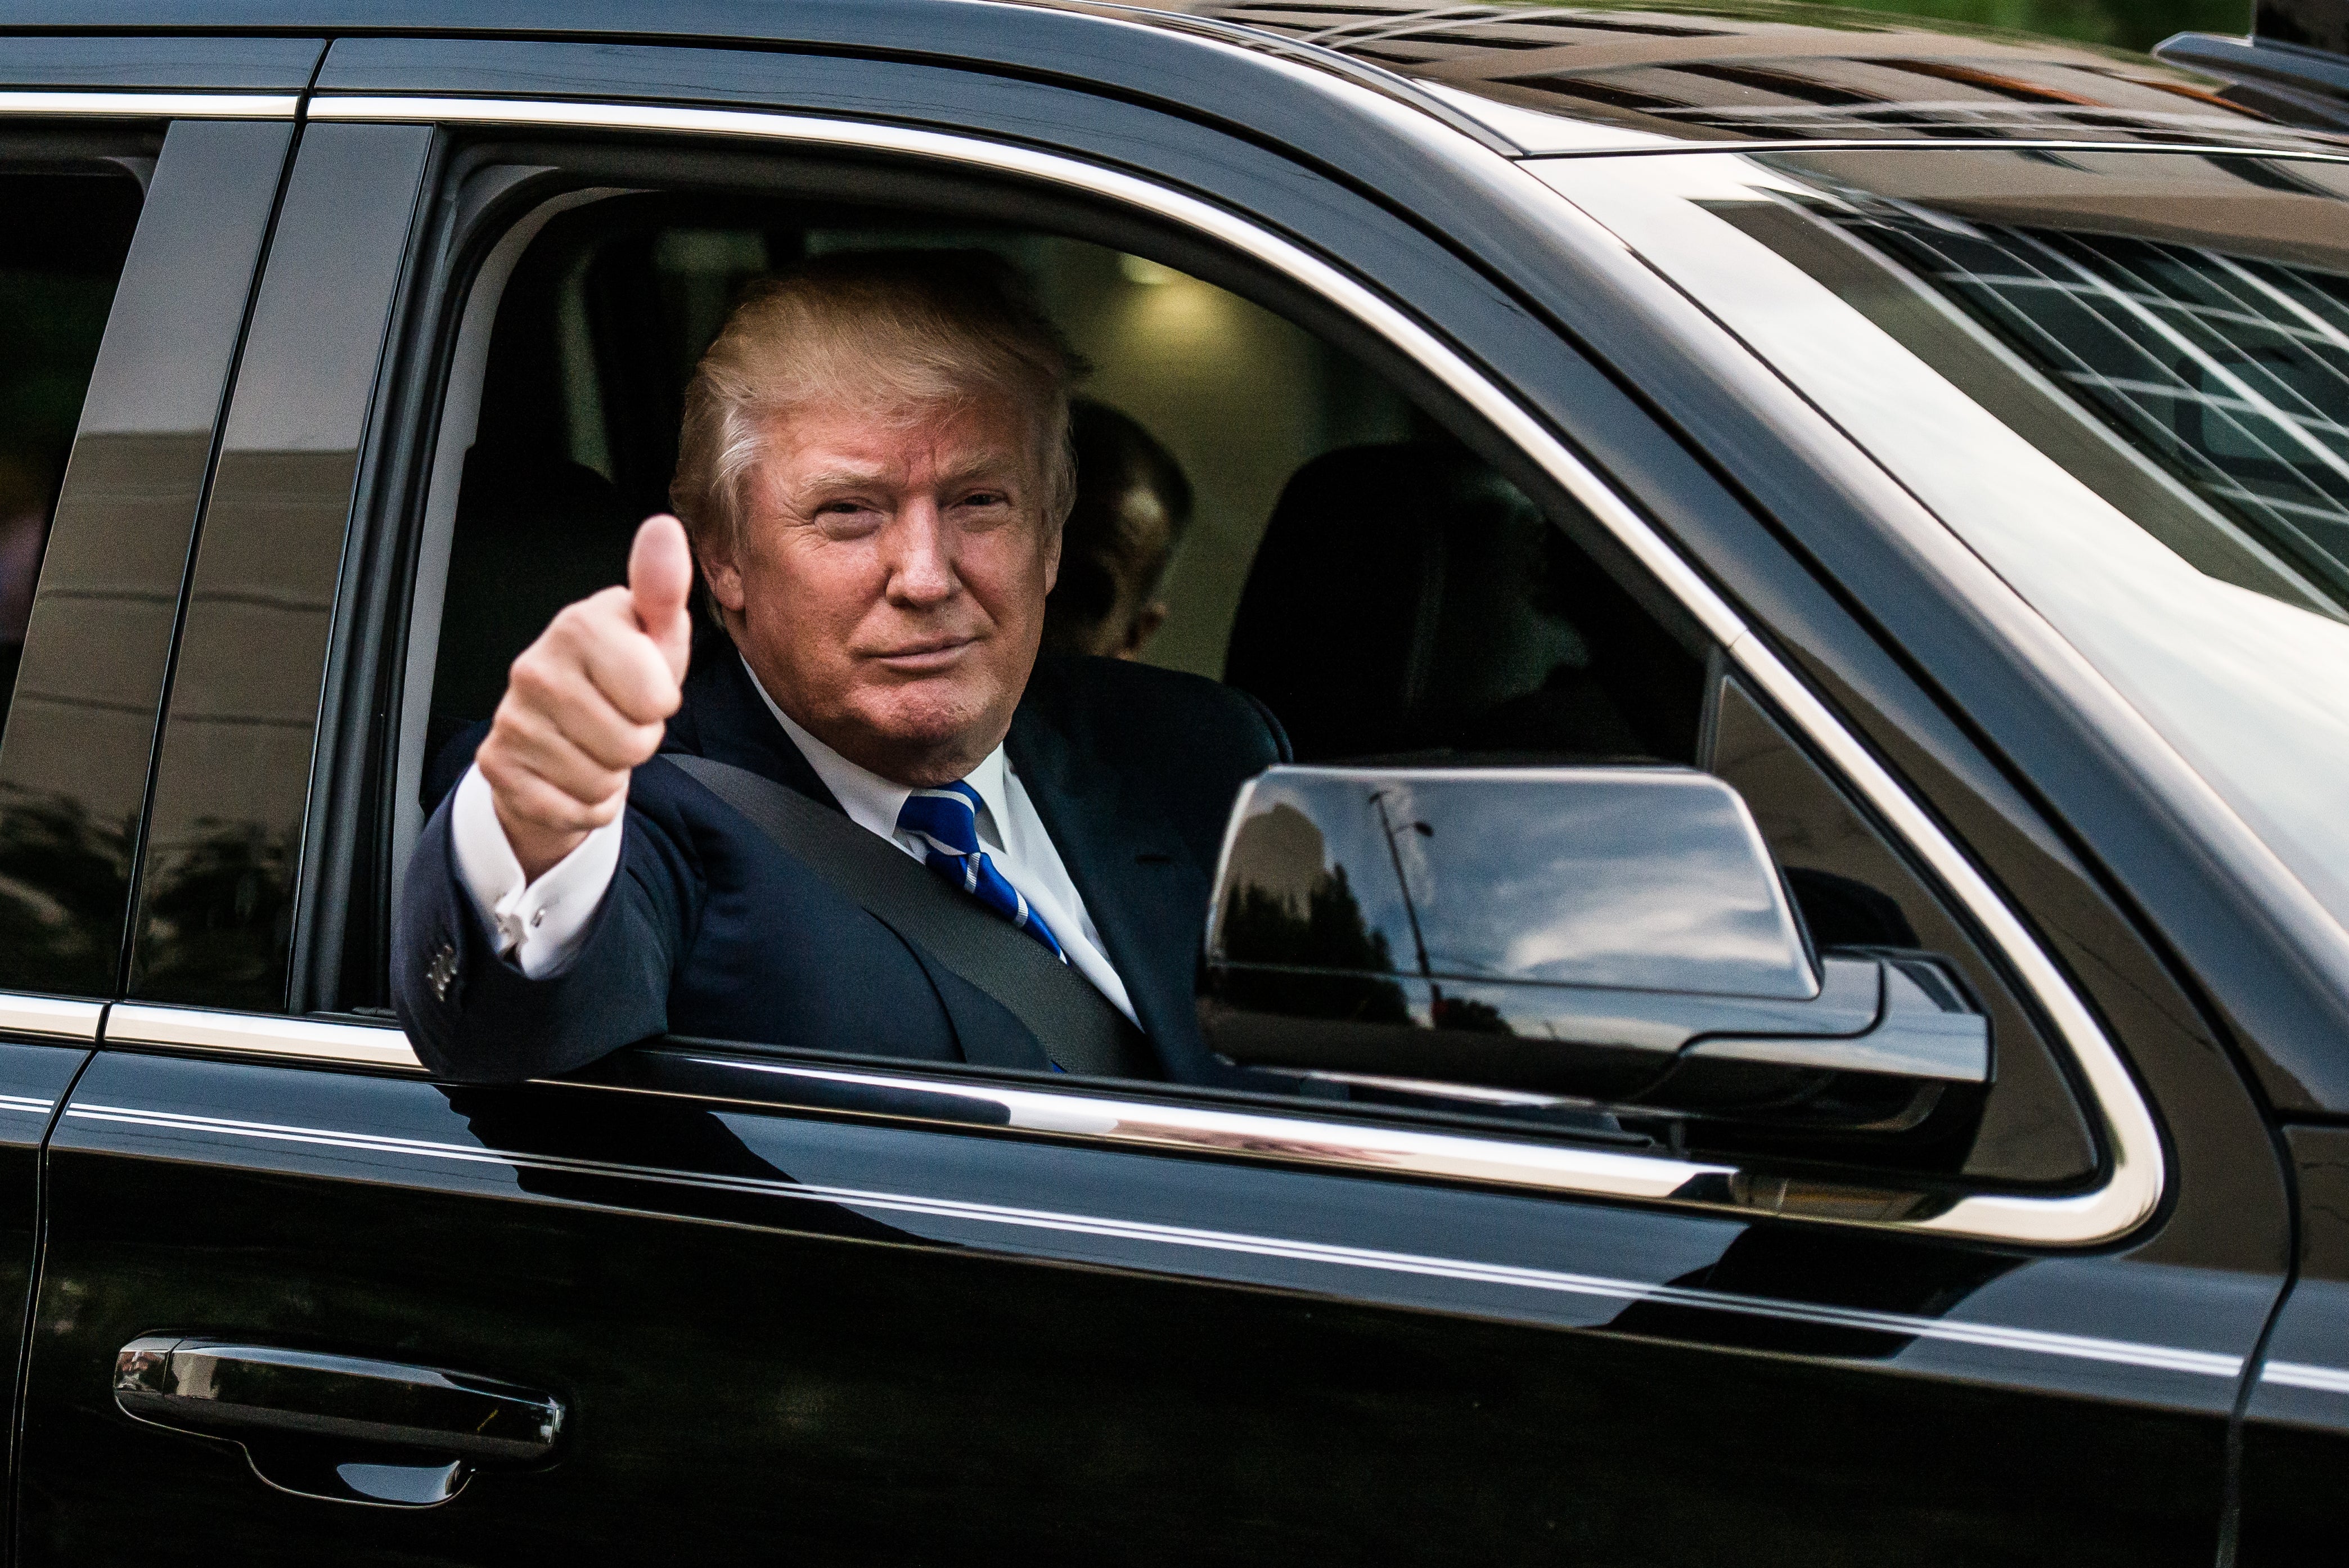 Donald Trump leaves a campaign event in Columbia, South Carolina.